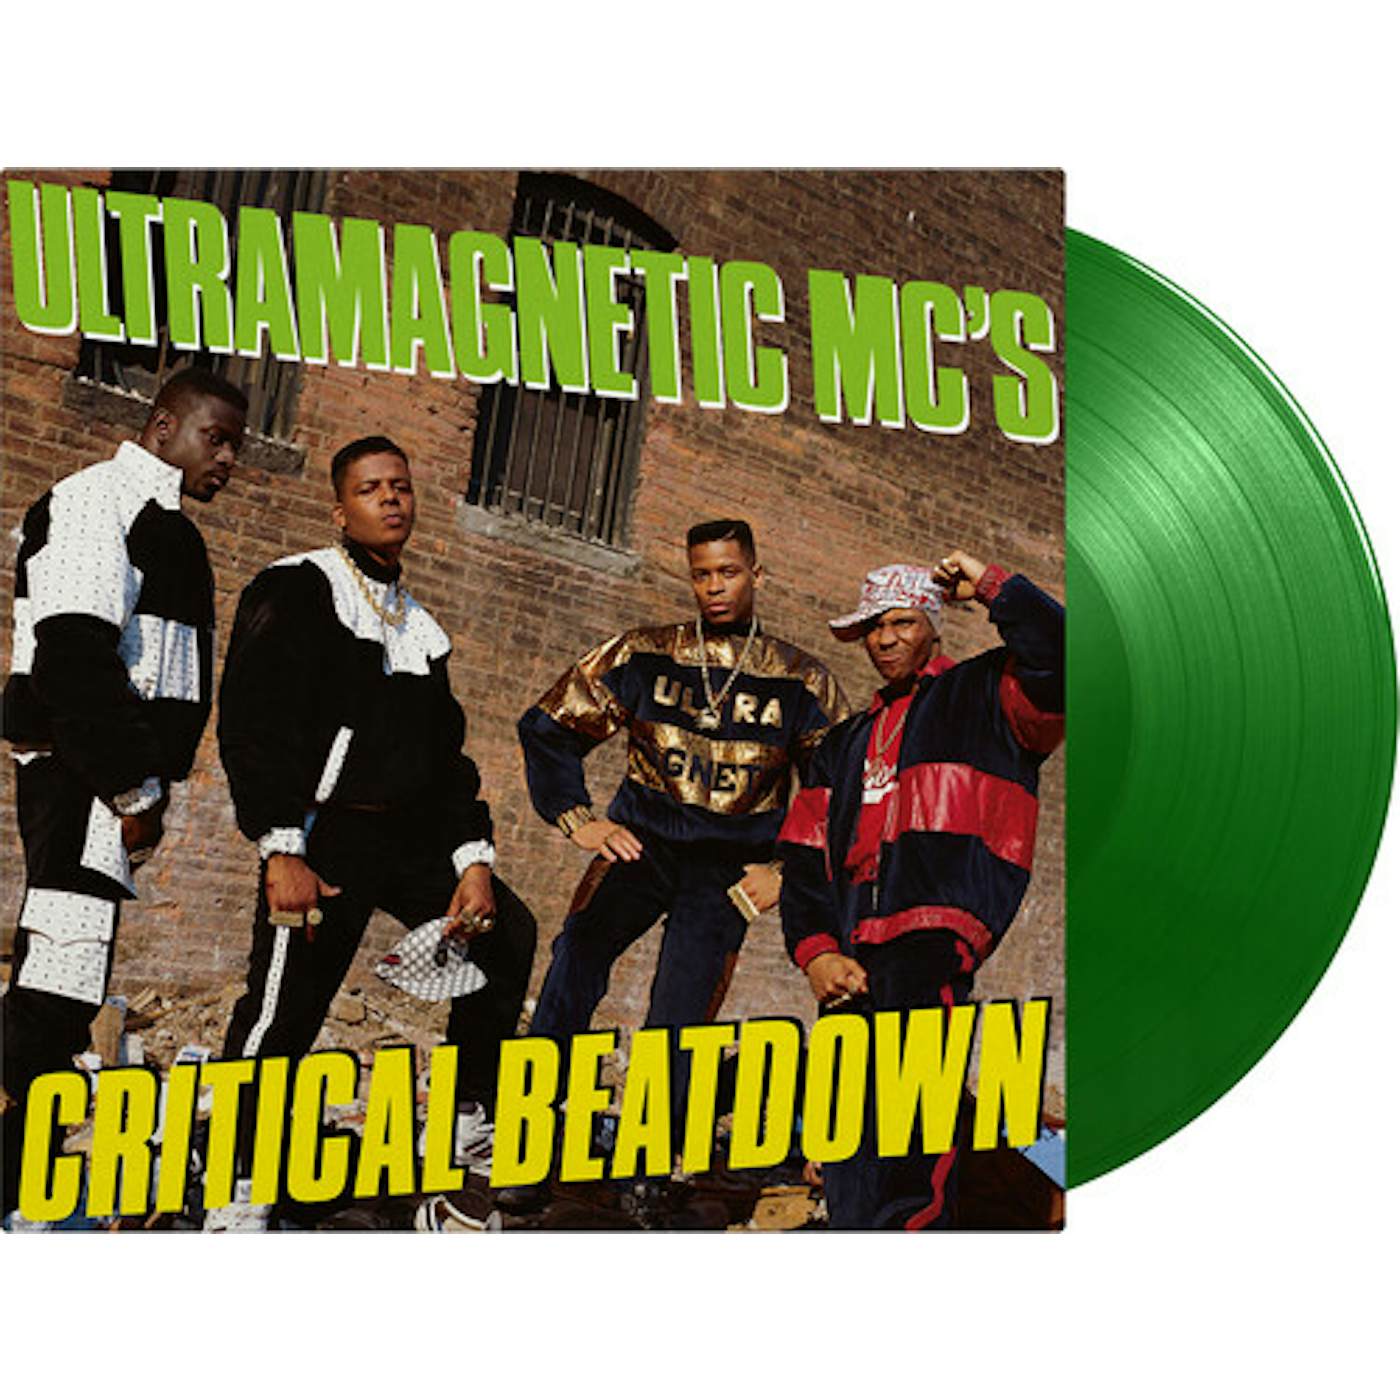 Ultramagnetic MC's CRITICAL BEATDOWN Vinyl Record